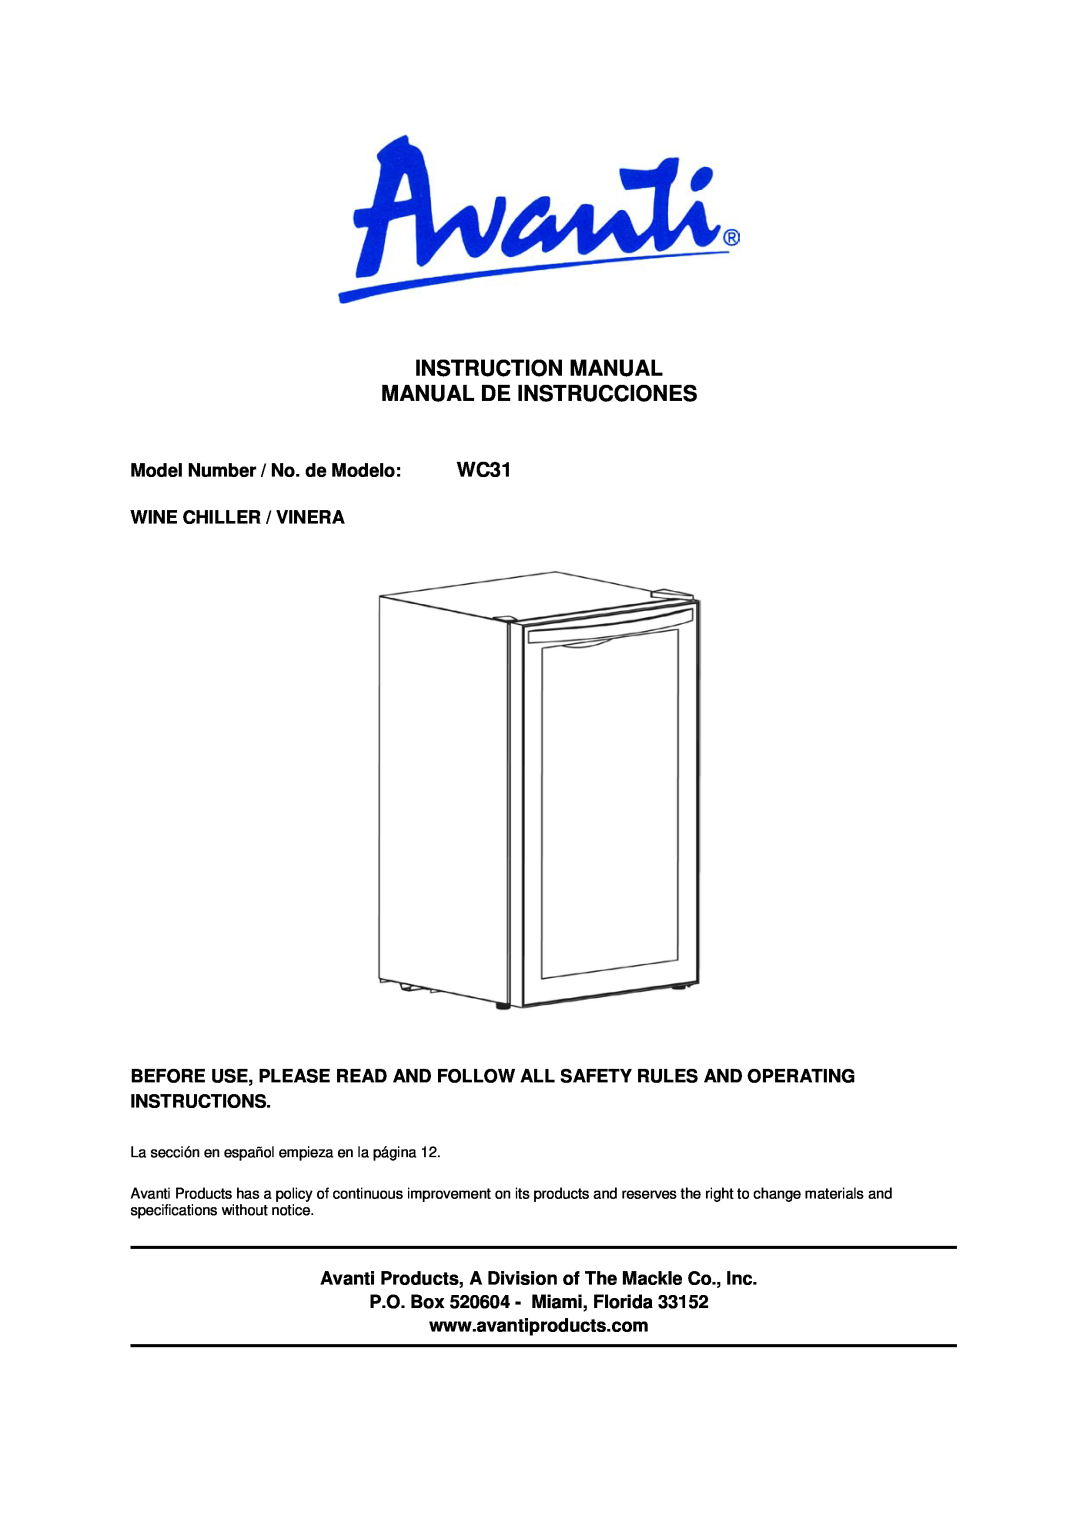 Avanti WC31 instruction manual Model Number / No. de Modelo, Wine Chiller / Vinera, P.O. Box 520604 - Miami, Florida 